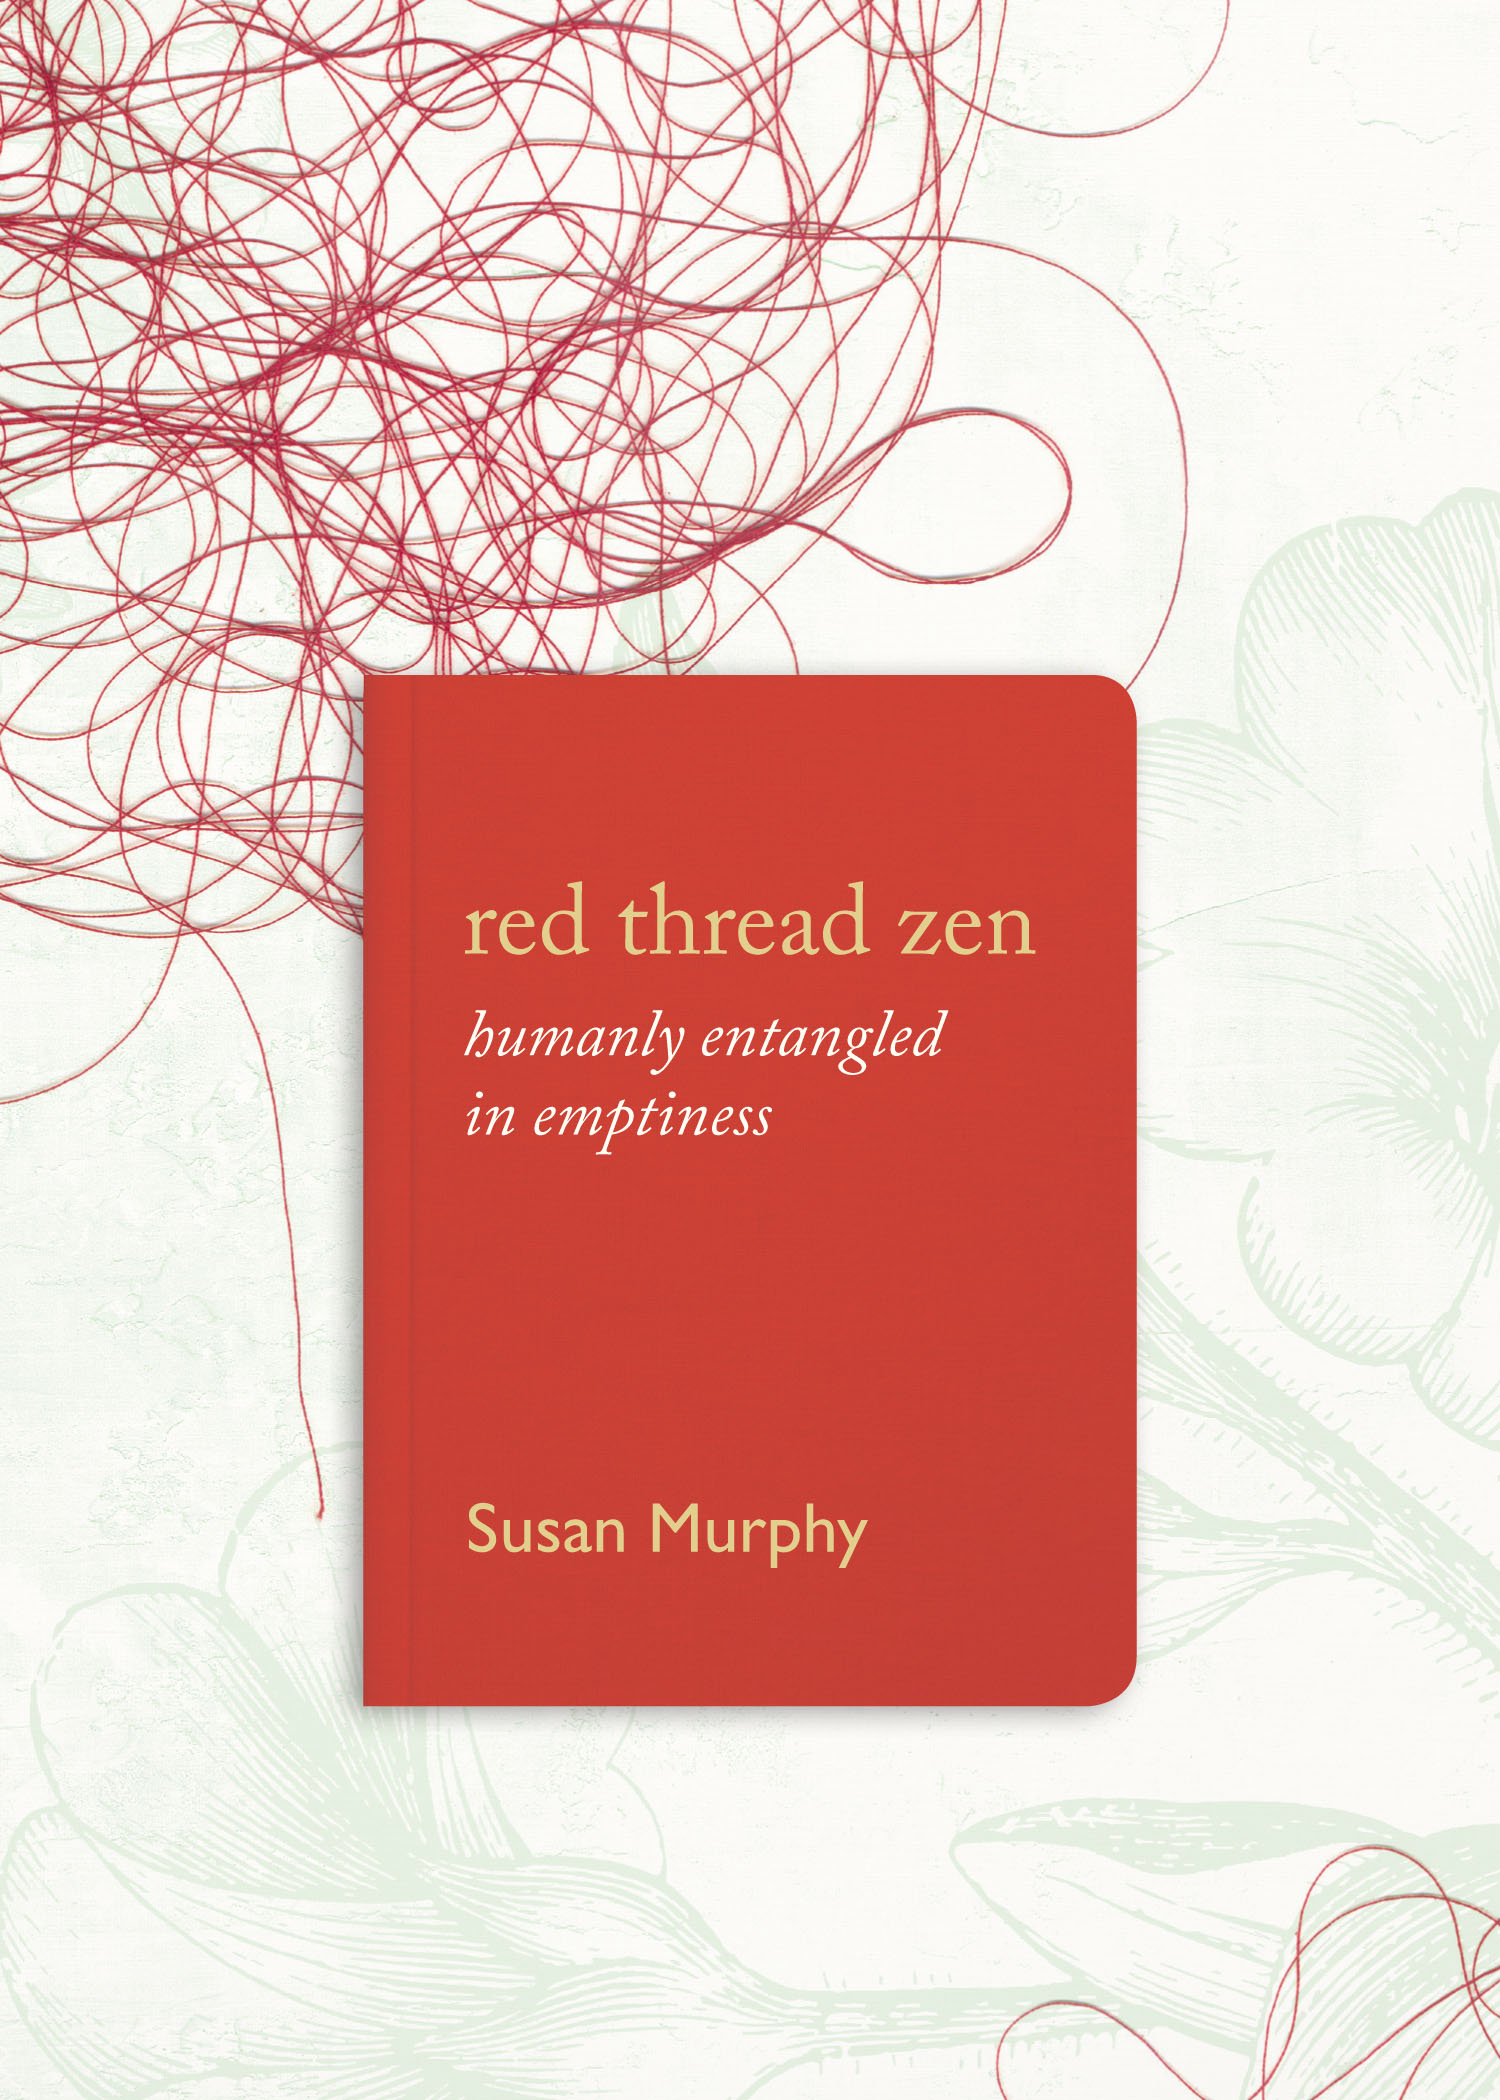 Red Thread Zen